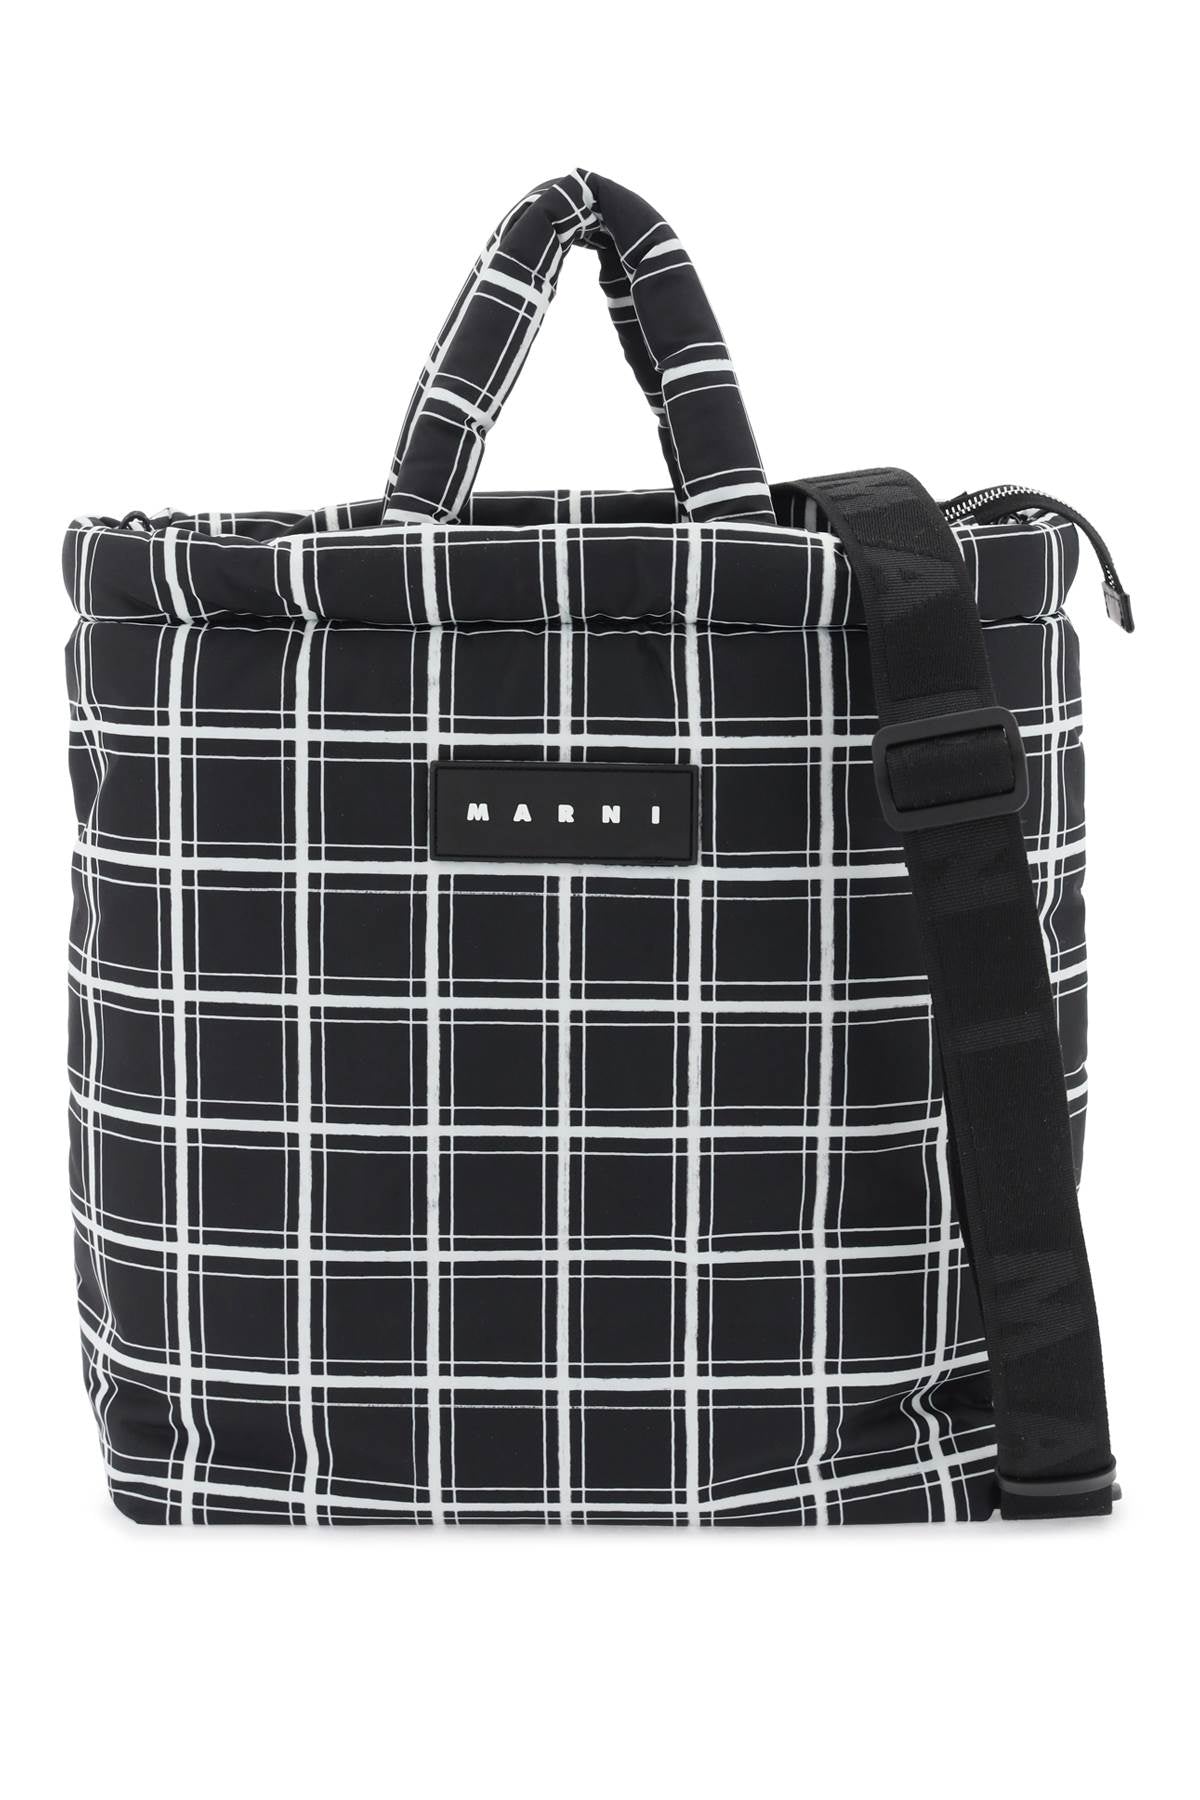 MARNI Black Padded Nylon Handbag with Check Pattern and Removable Strap